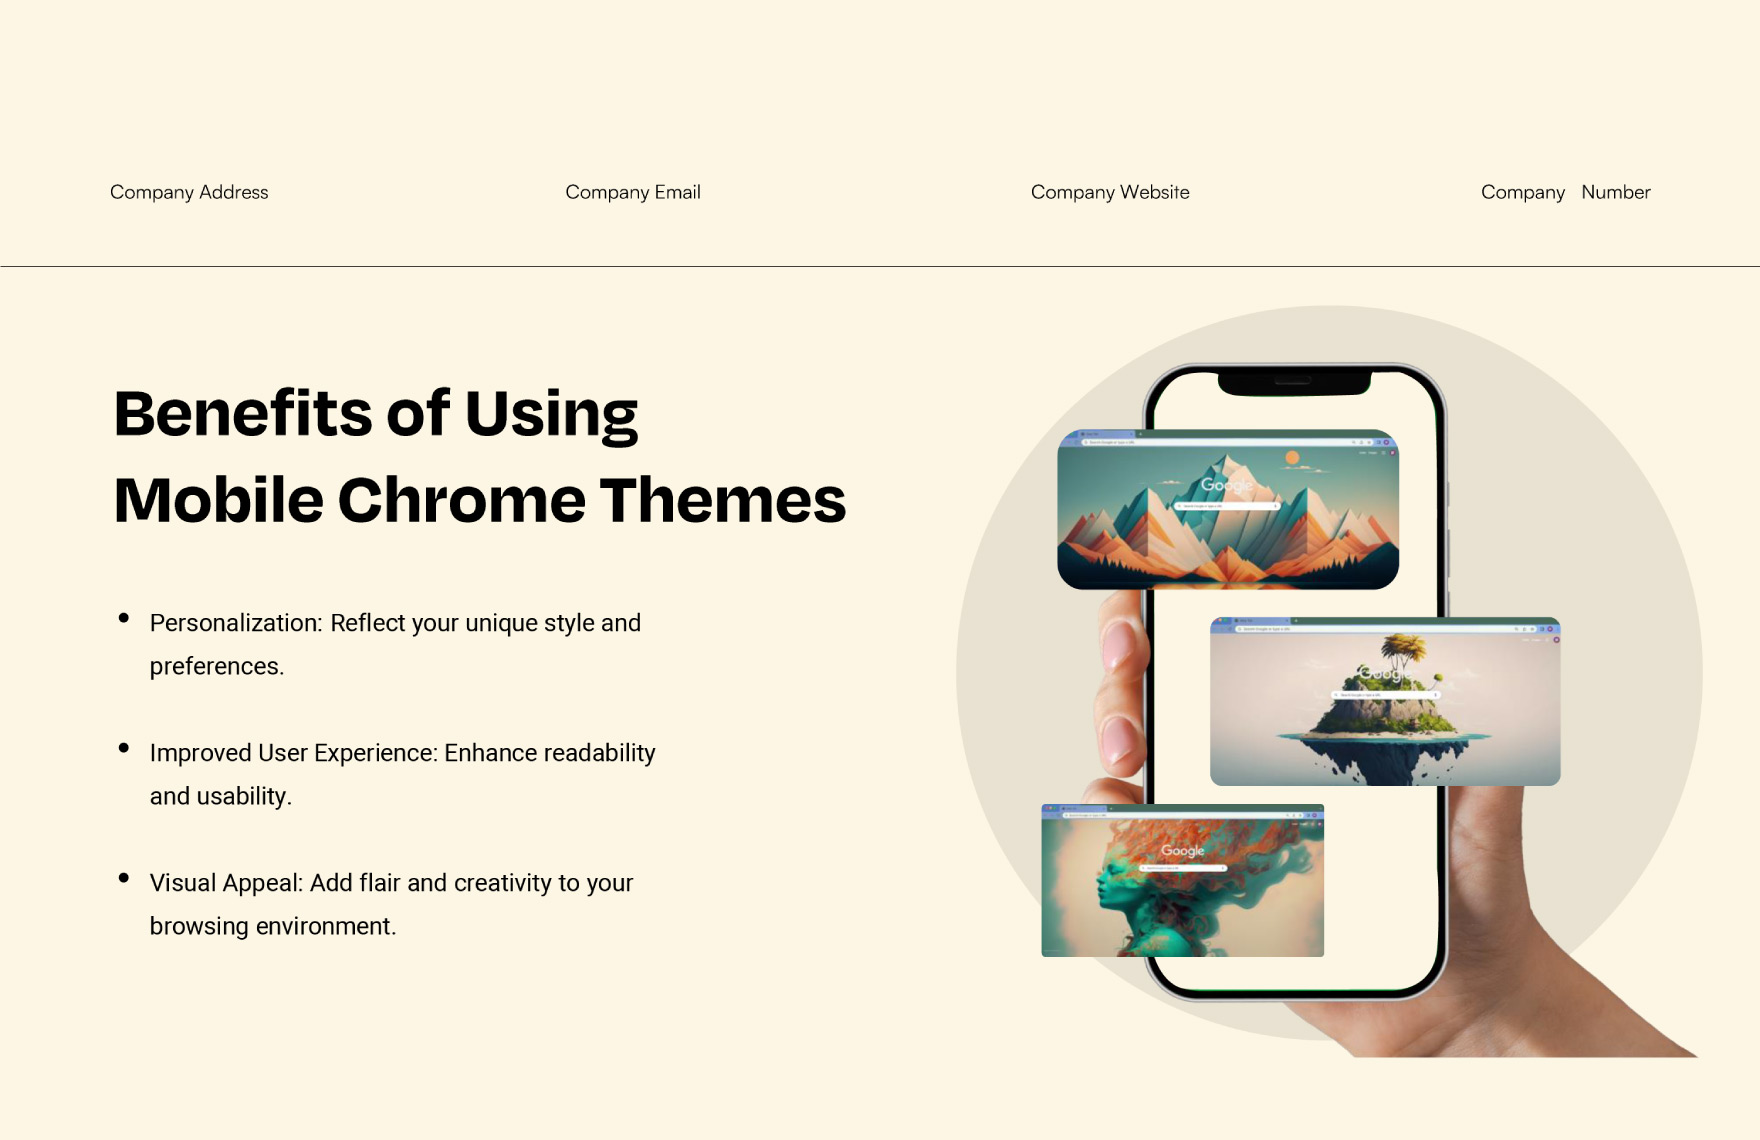 Mobile Chrome Themes Template